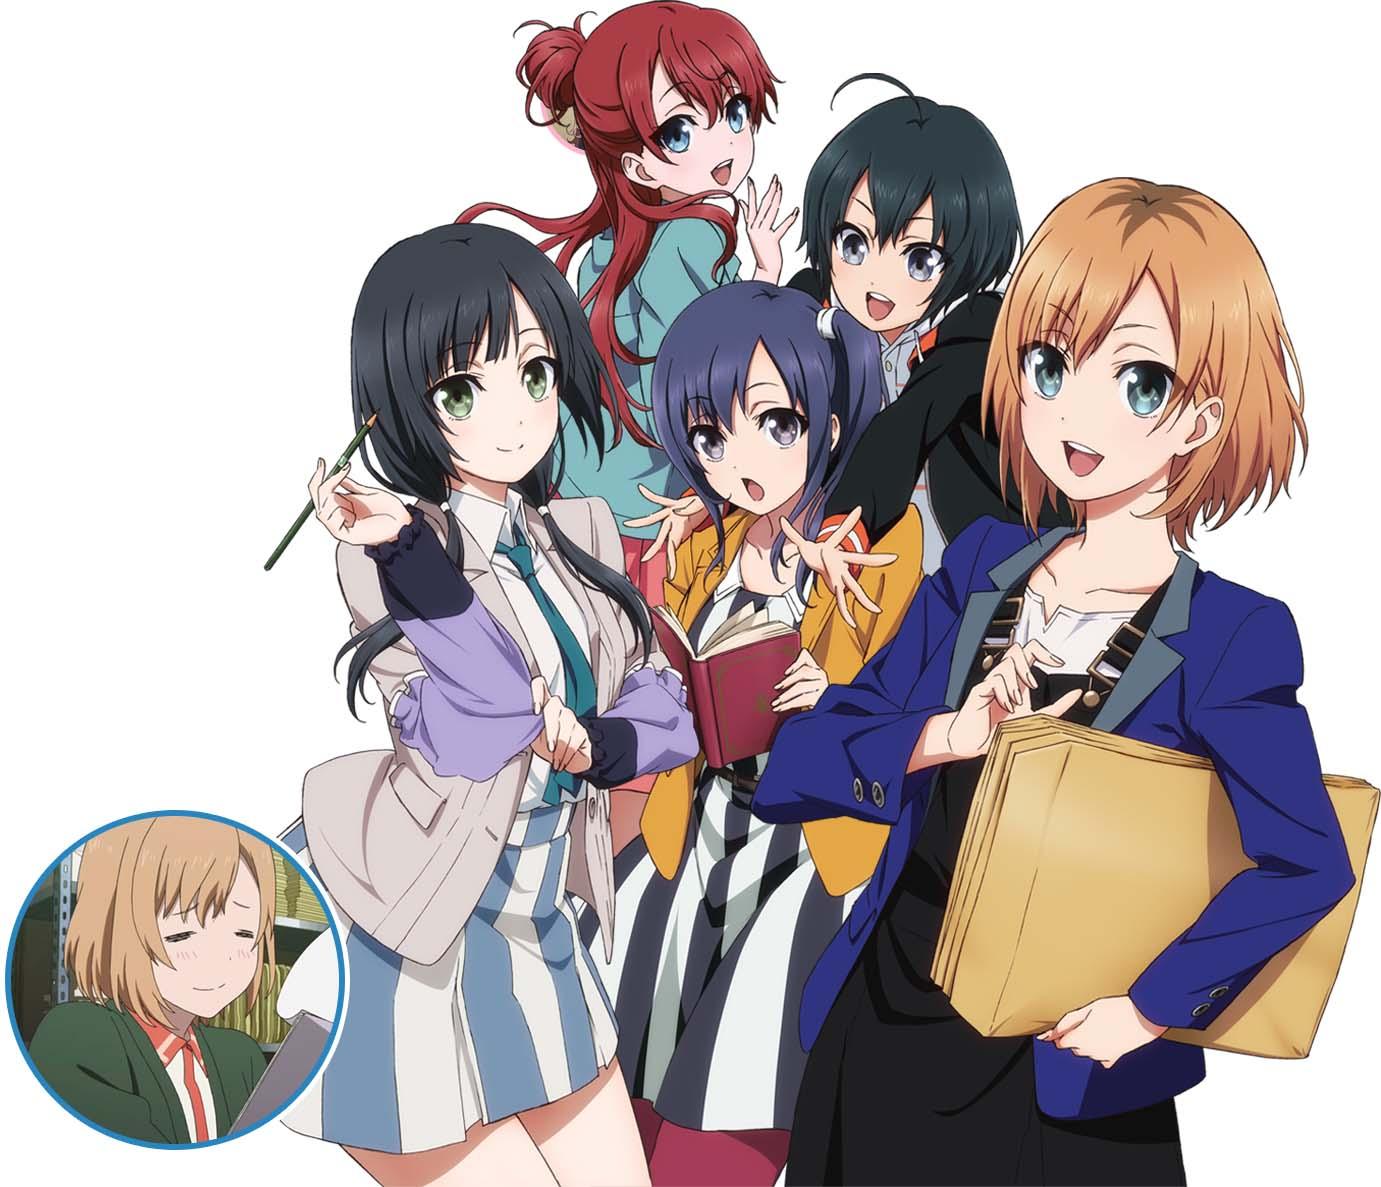 Tsurune TV Anime Gets 2nd Season in January 2023 - News - Anime News Network